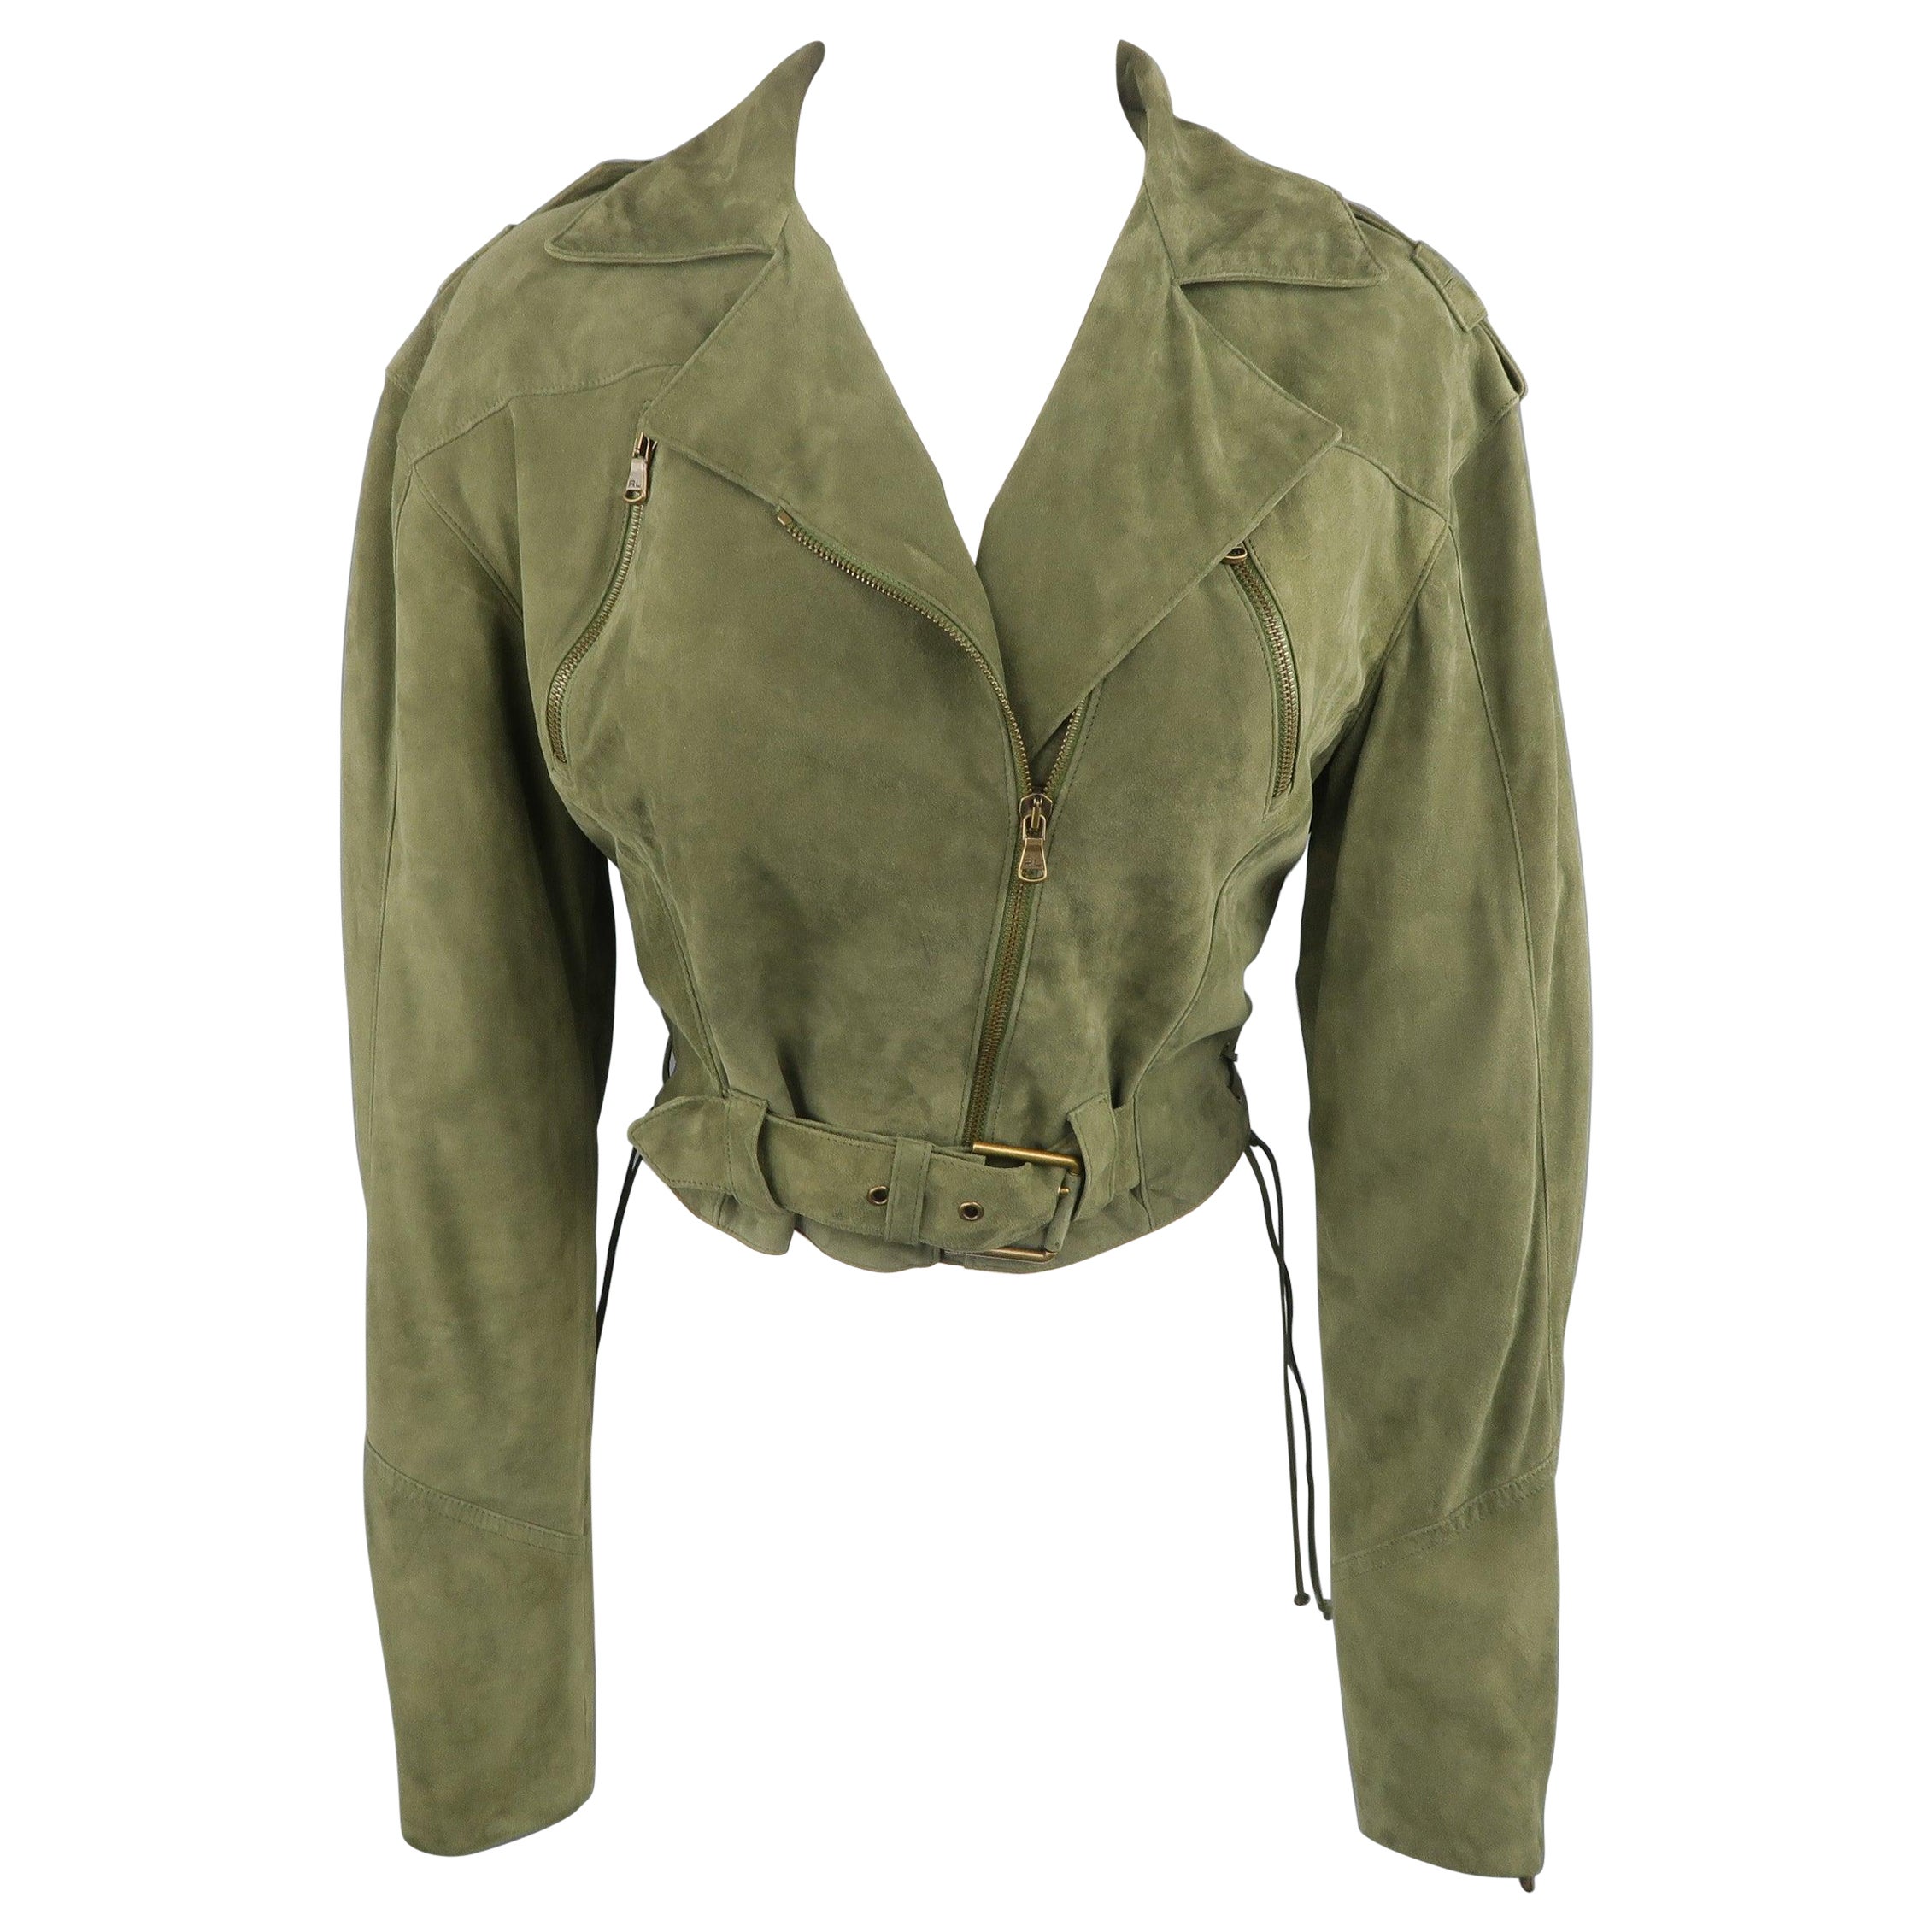 RALPH LAUREN Size 6 Olive Suede Cropped Lace Up Biker Jacket For Sale